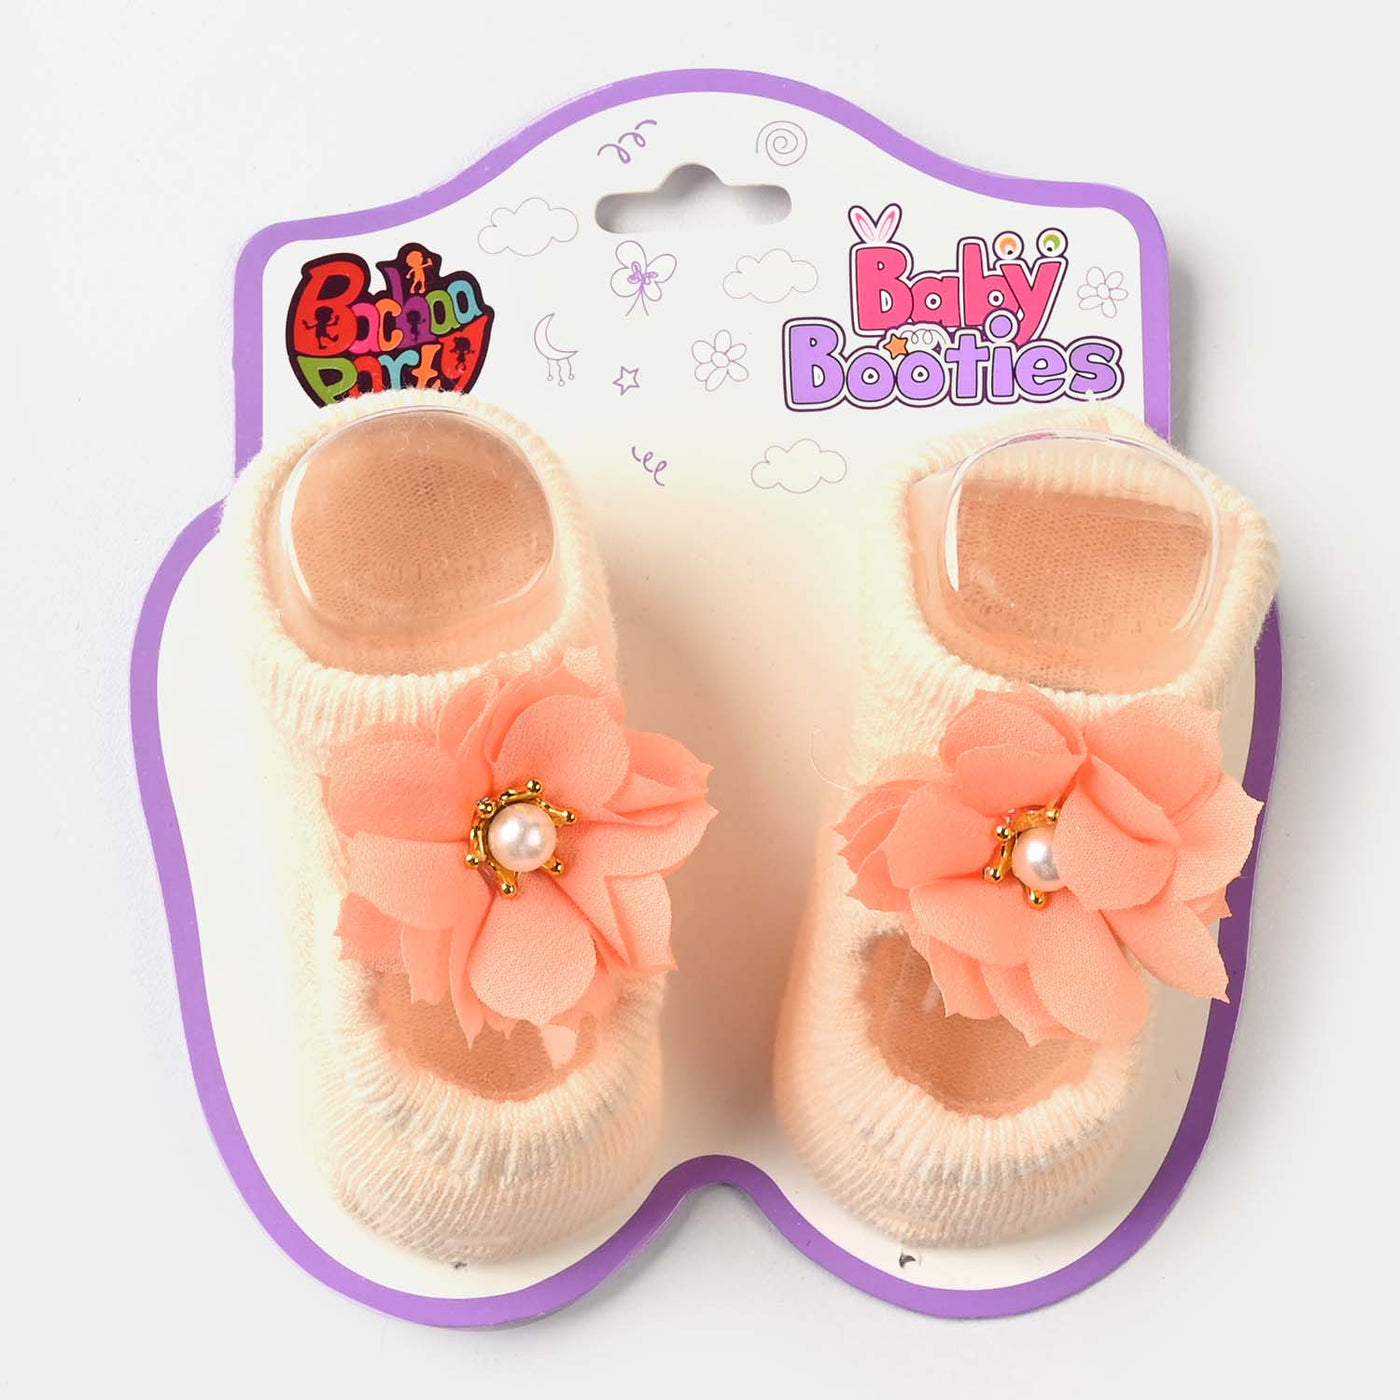 Baby Socks/Booties| Peach